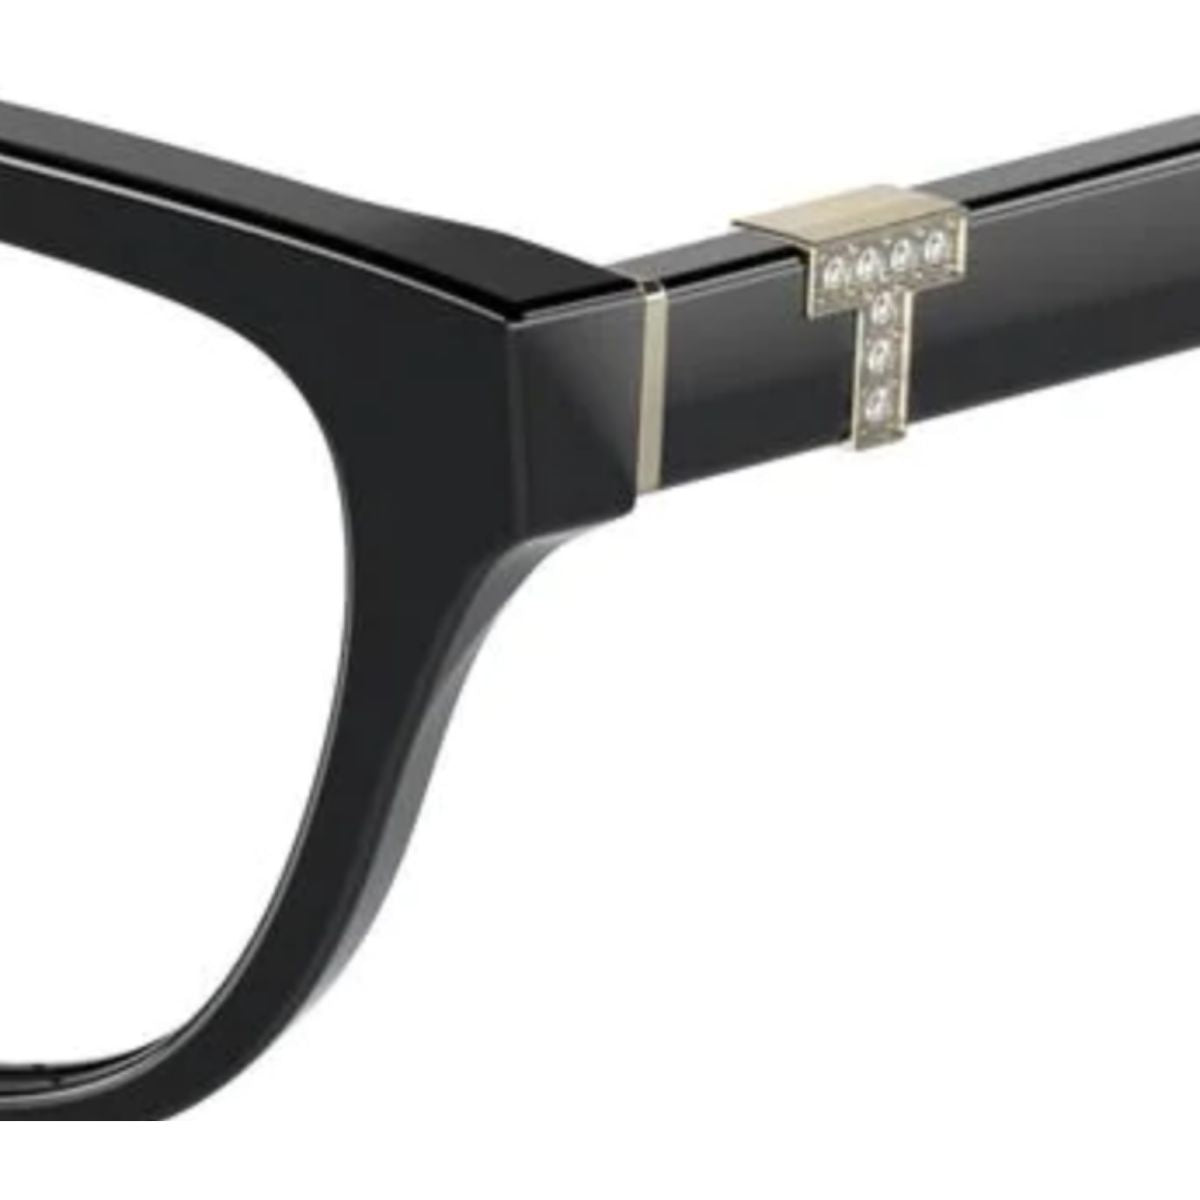 "stylish Tiffany And Co 2233-B 8001 eyesight glasses frame for women's at optorium"